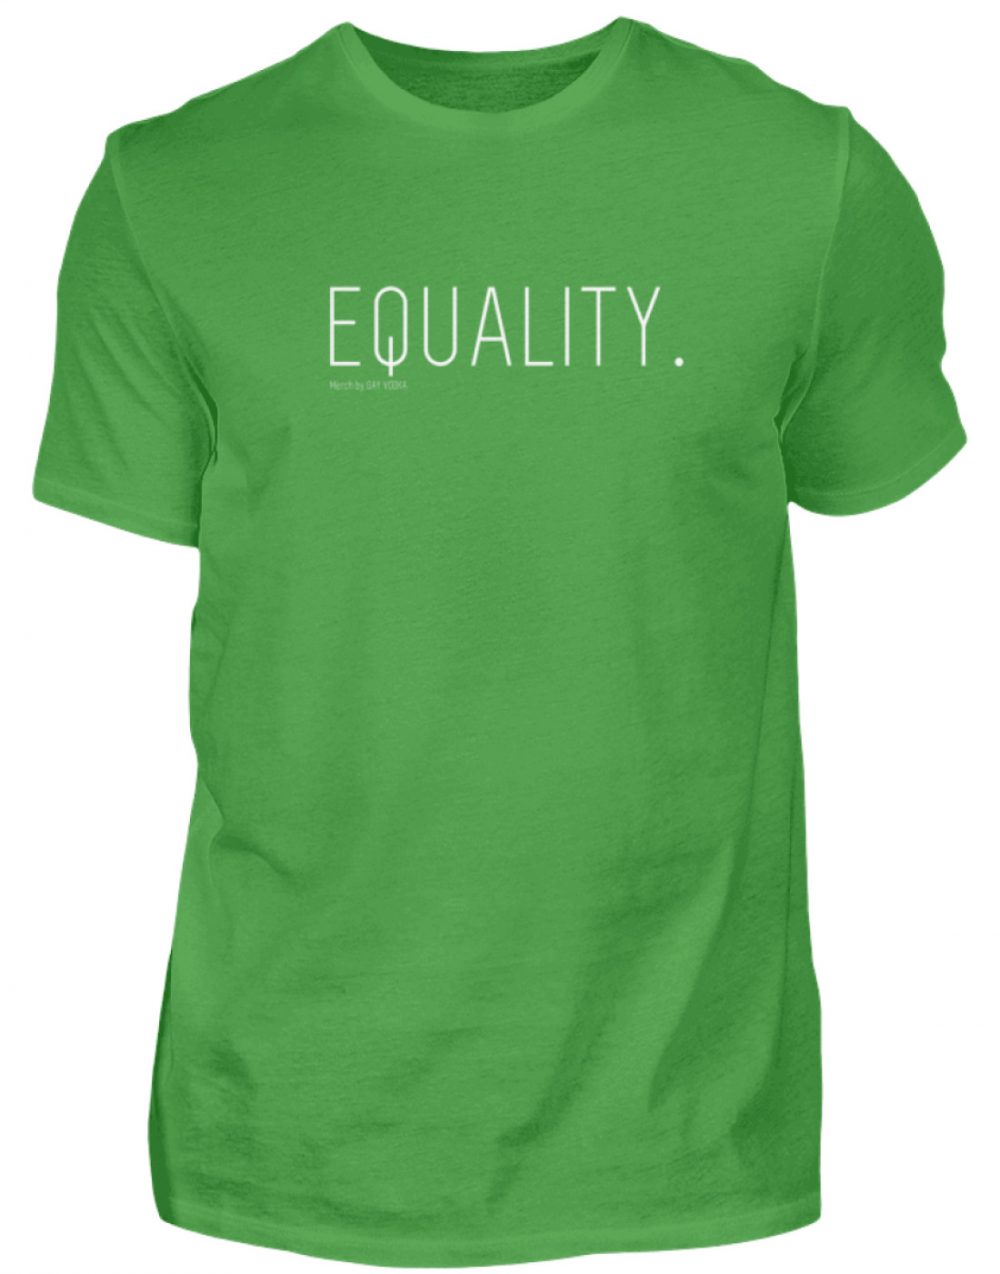 EQUALITY. - Herren Premiumshirt-2971